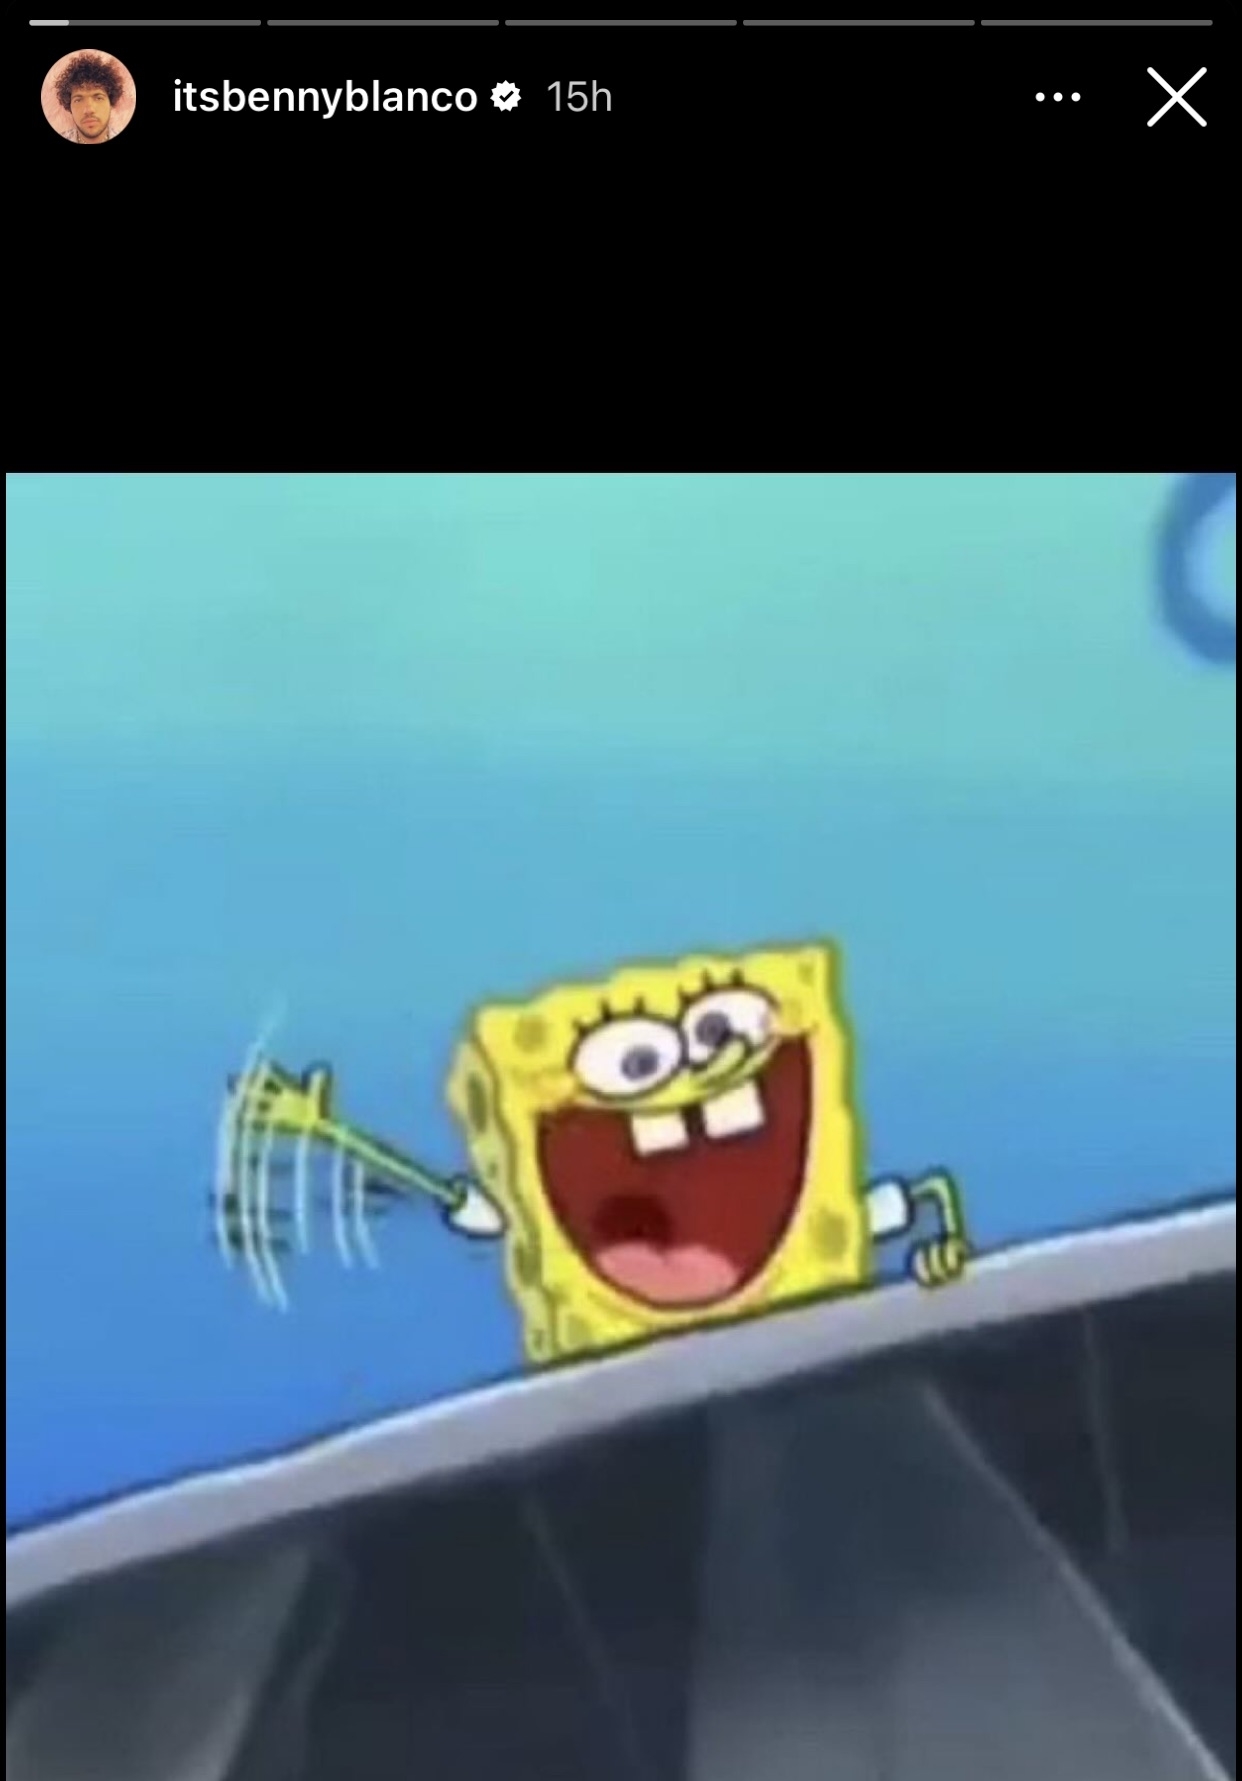 spongebob waving fanatically